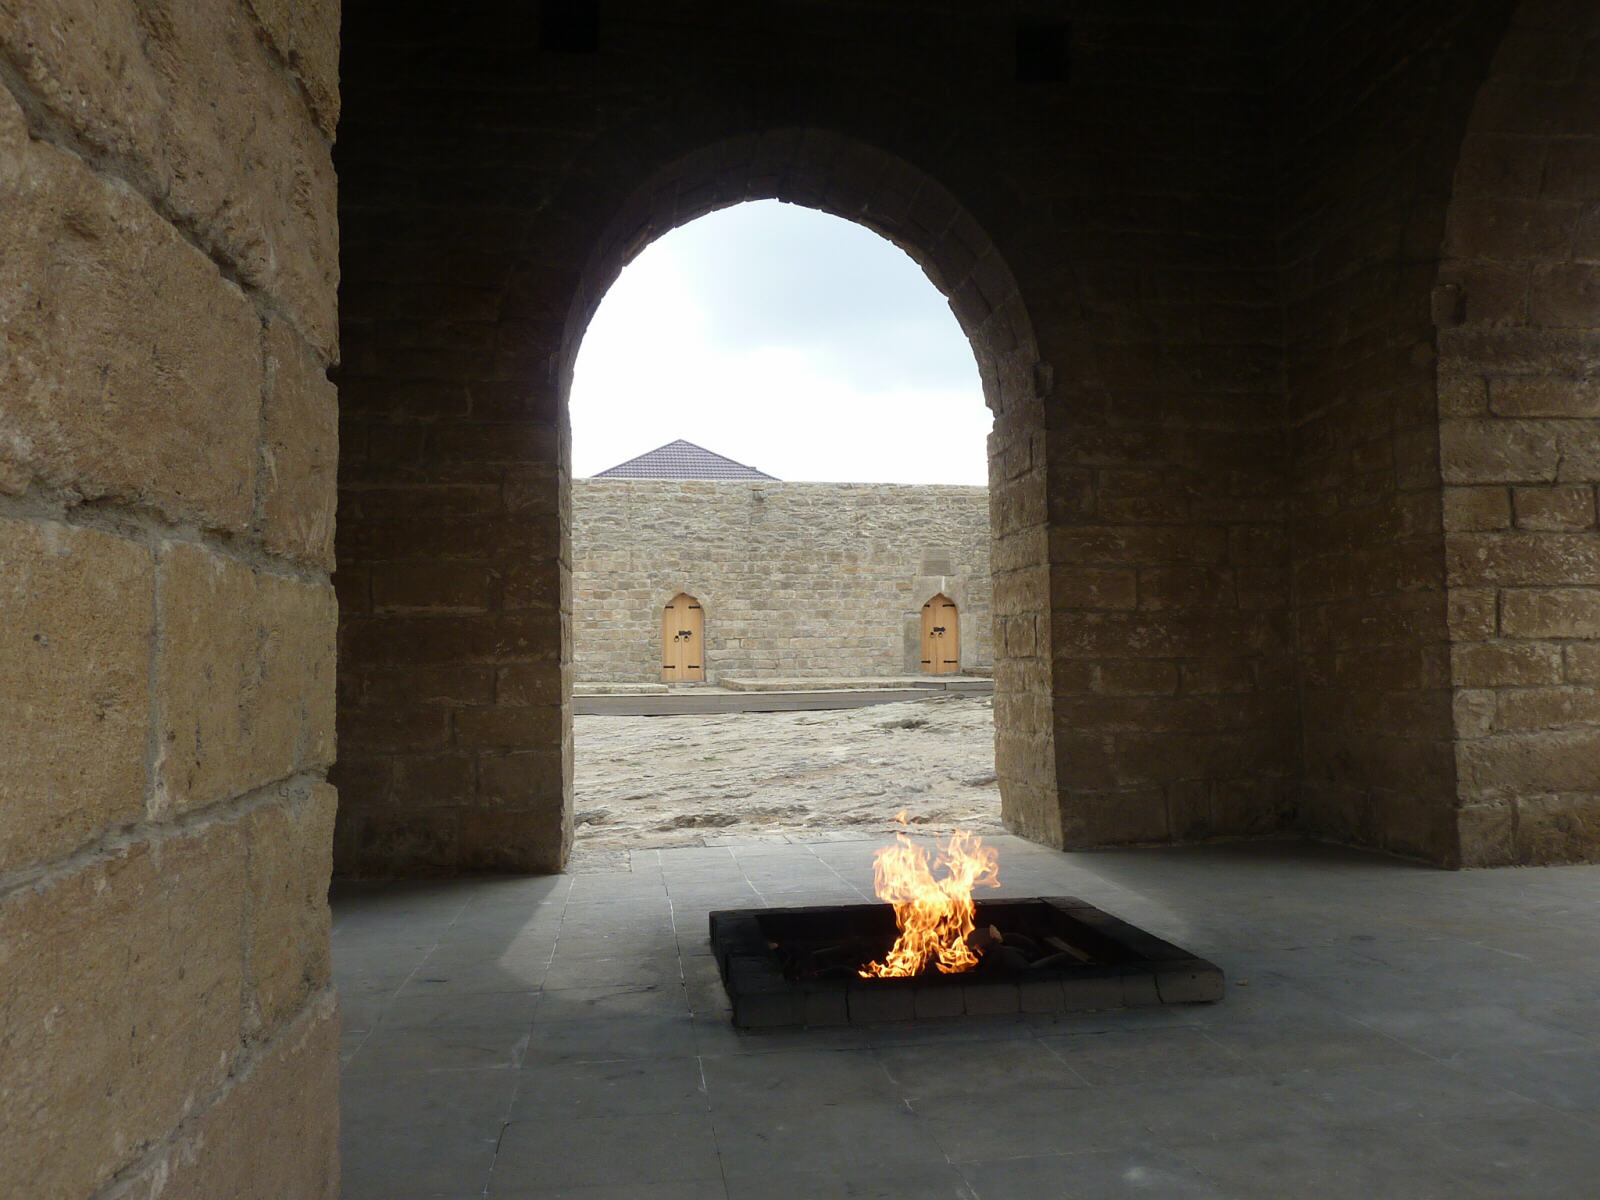 The 'everlasting flame' in the Ateshgah fire temple in Baku, Azerbaijan